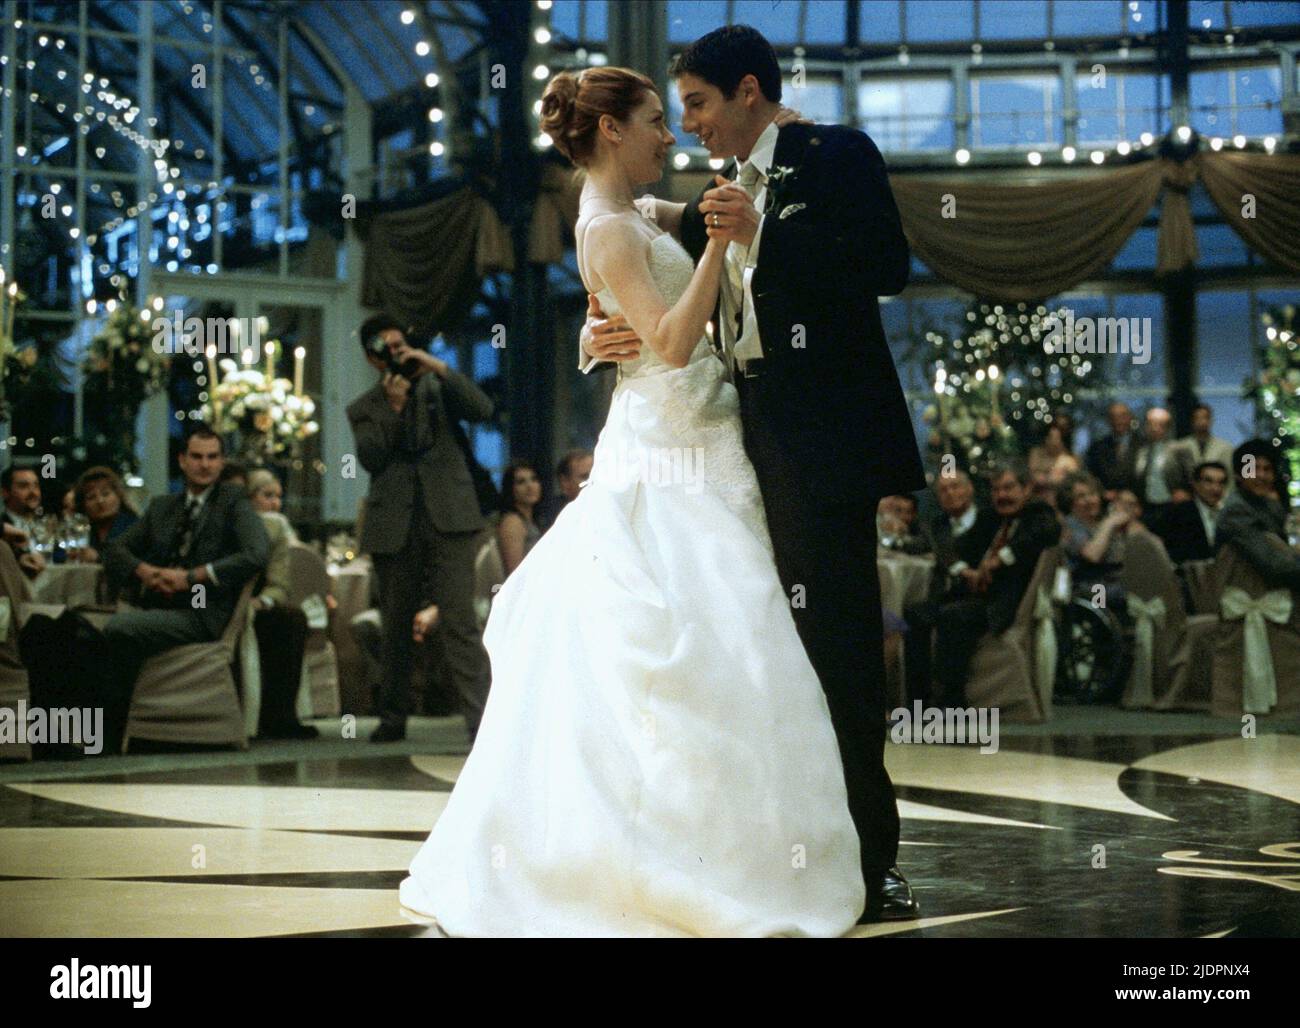 HANNIGAN,BIGGS, AMERICAN WEDDING, 2003, Stock Photo